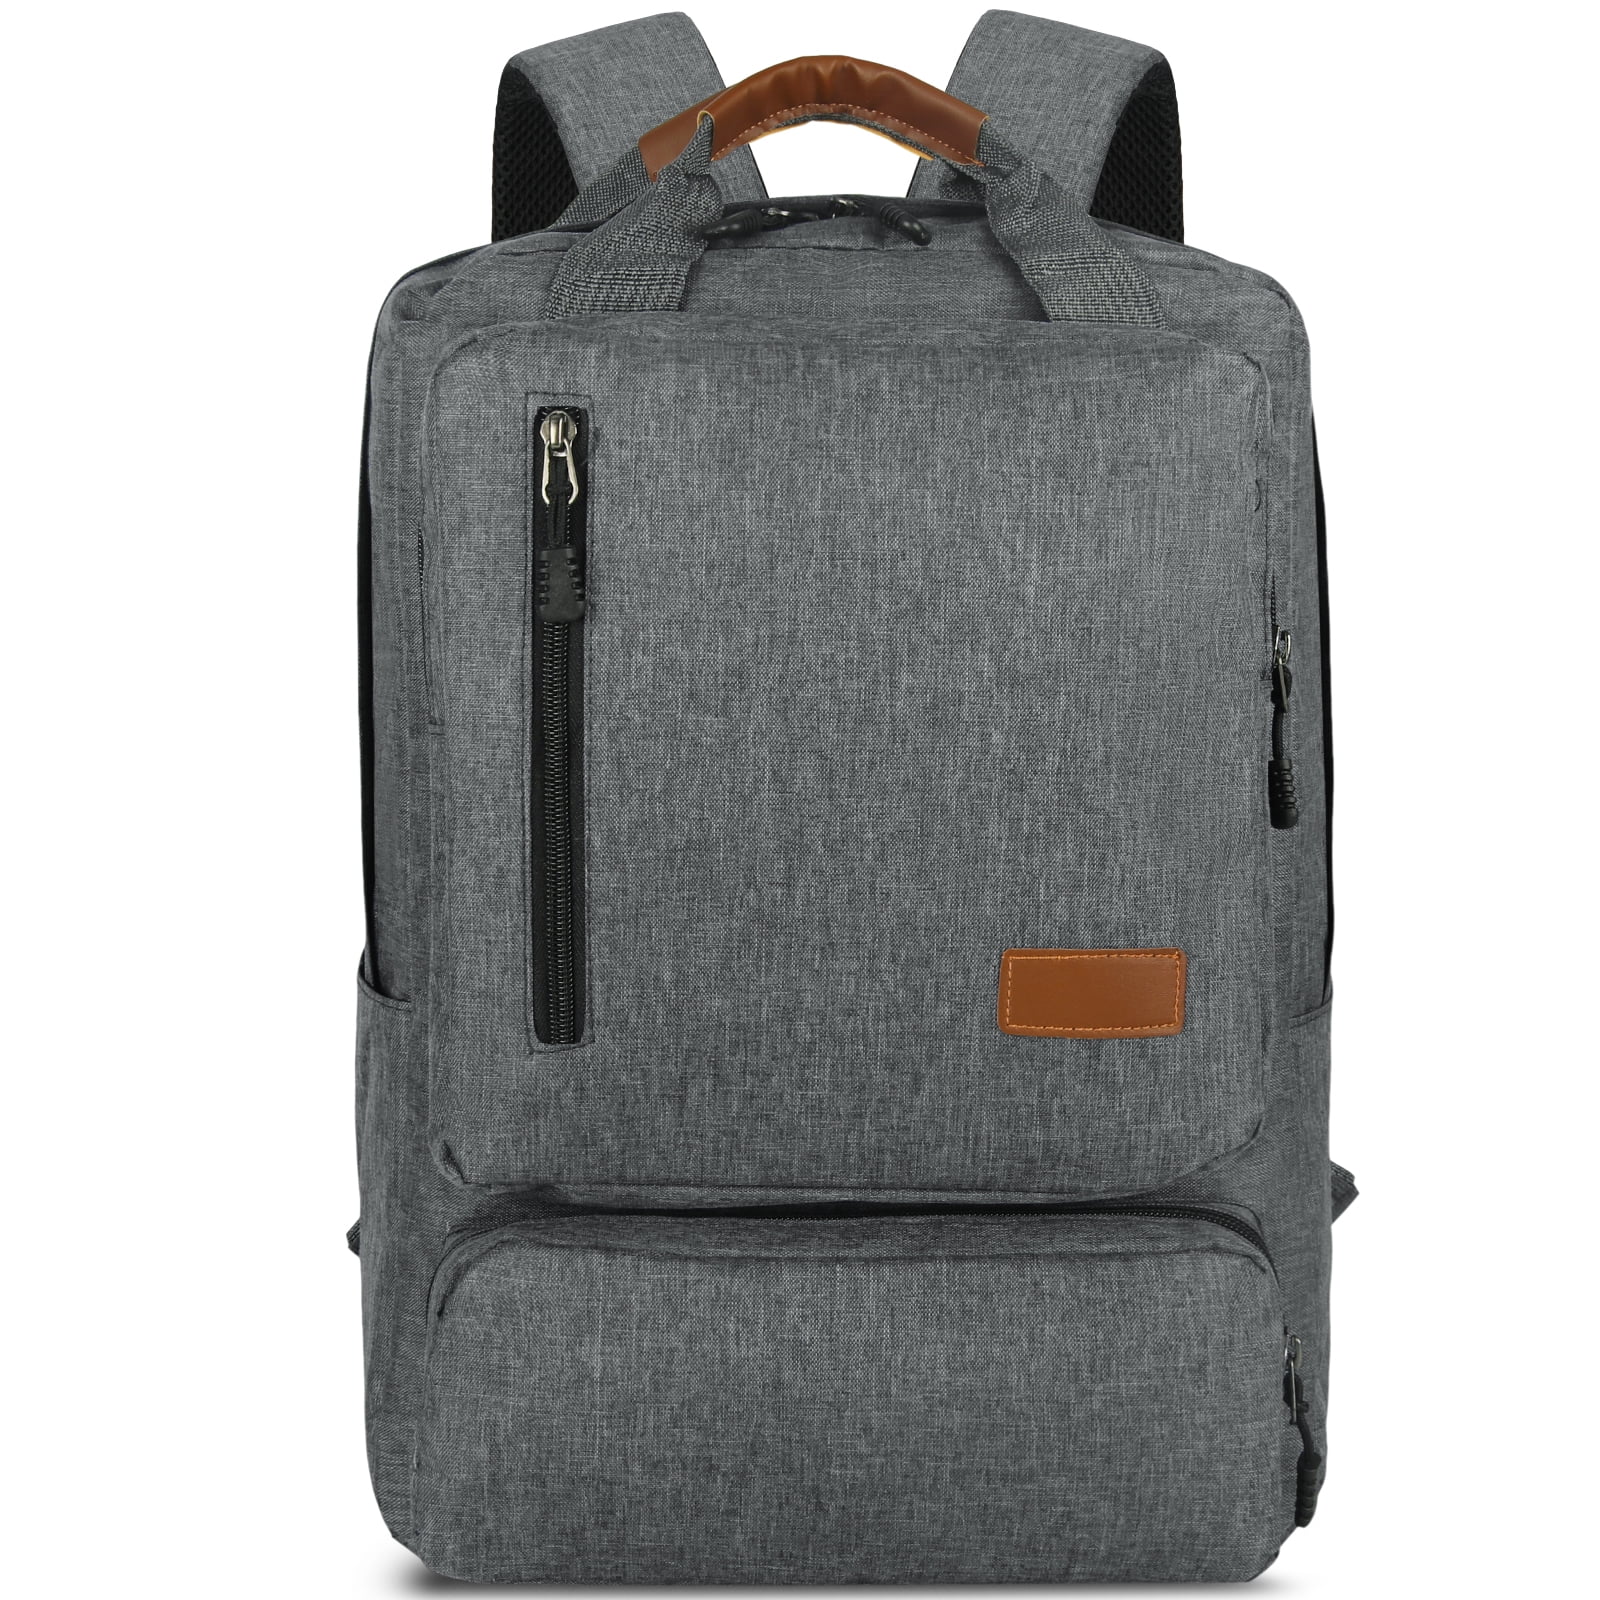 Travel Laptop Backpack for Men Women Waterproof Work Business Laptop Backpack 